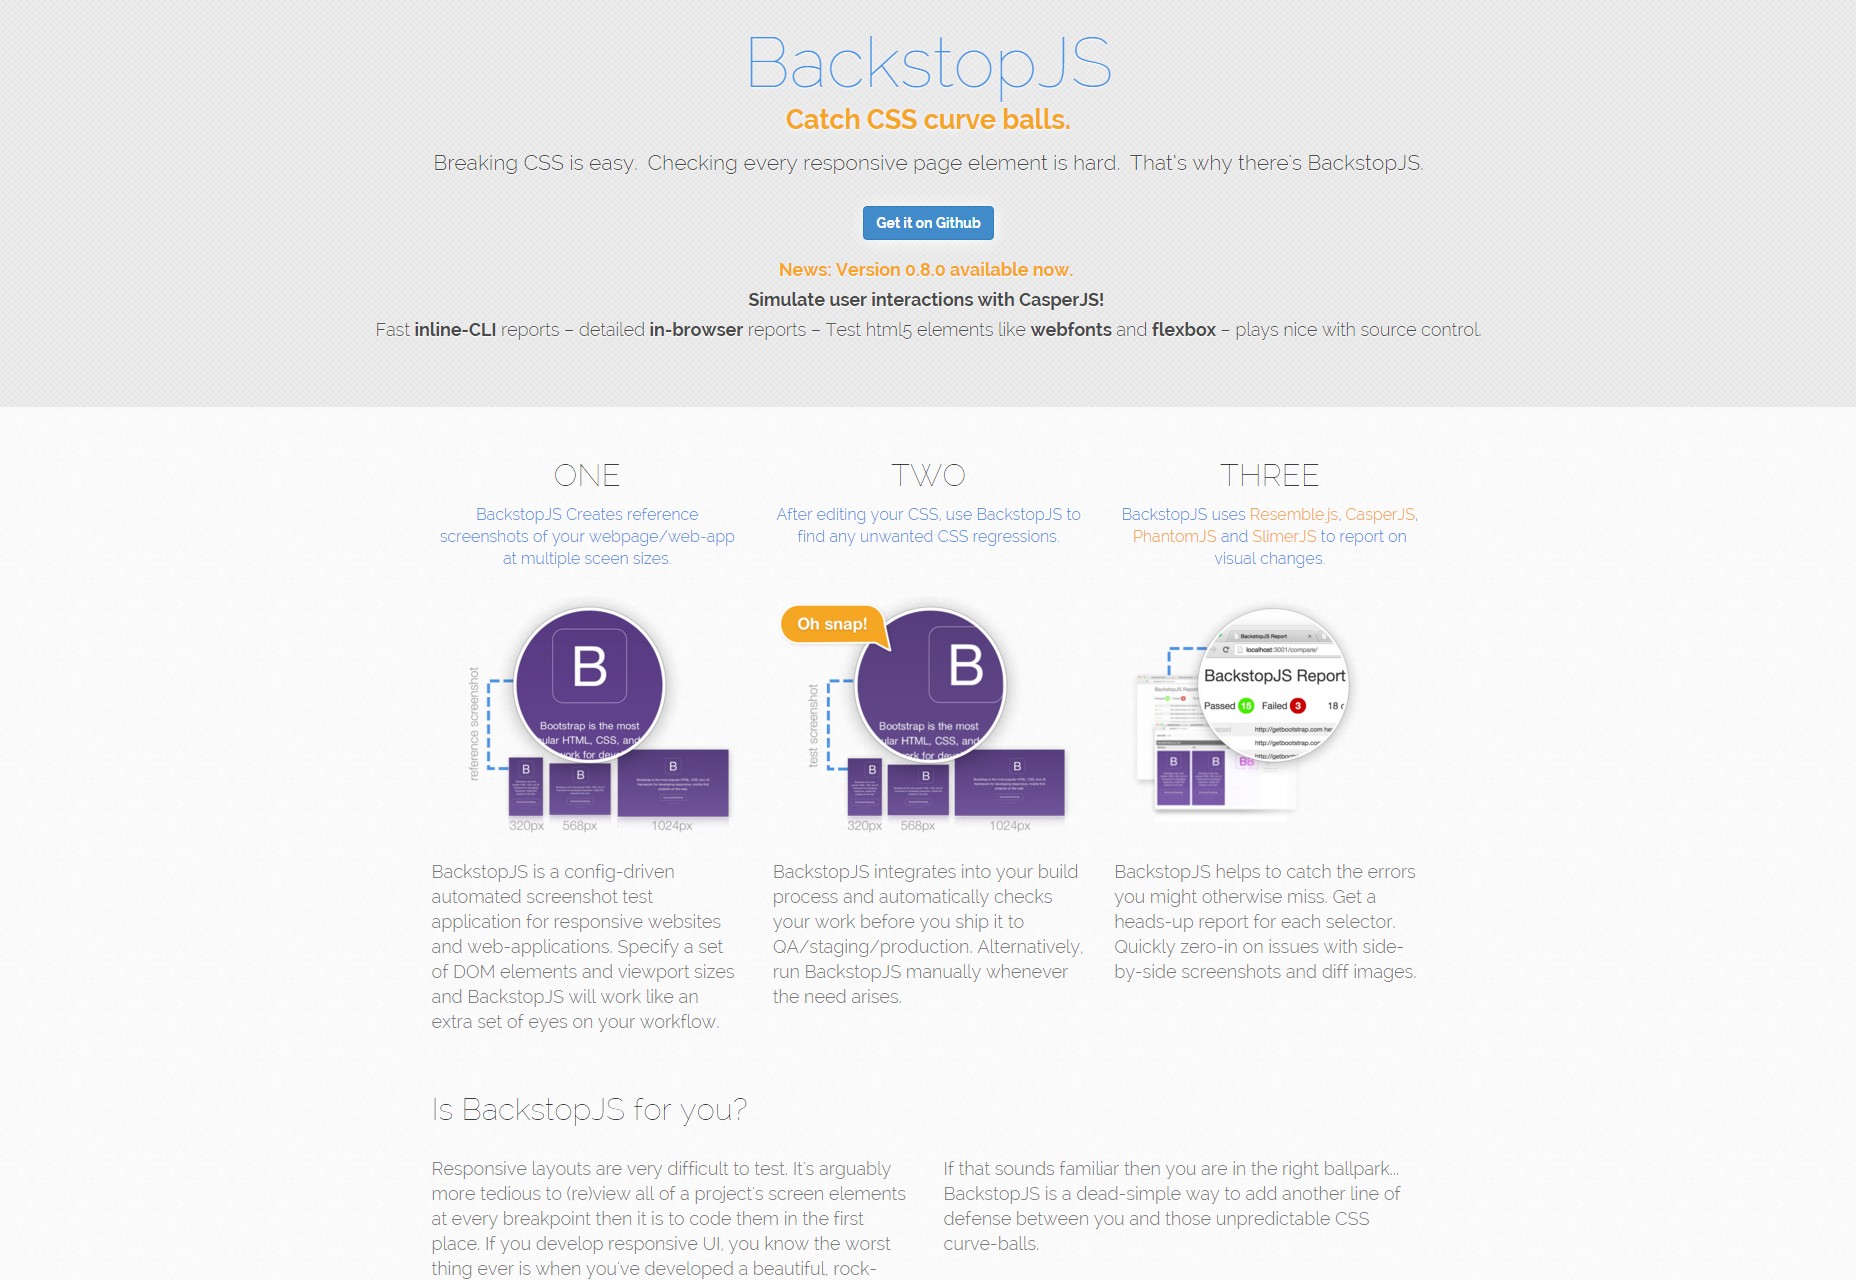 backstopjs-config-driven-screenshot-test-application